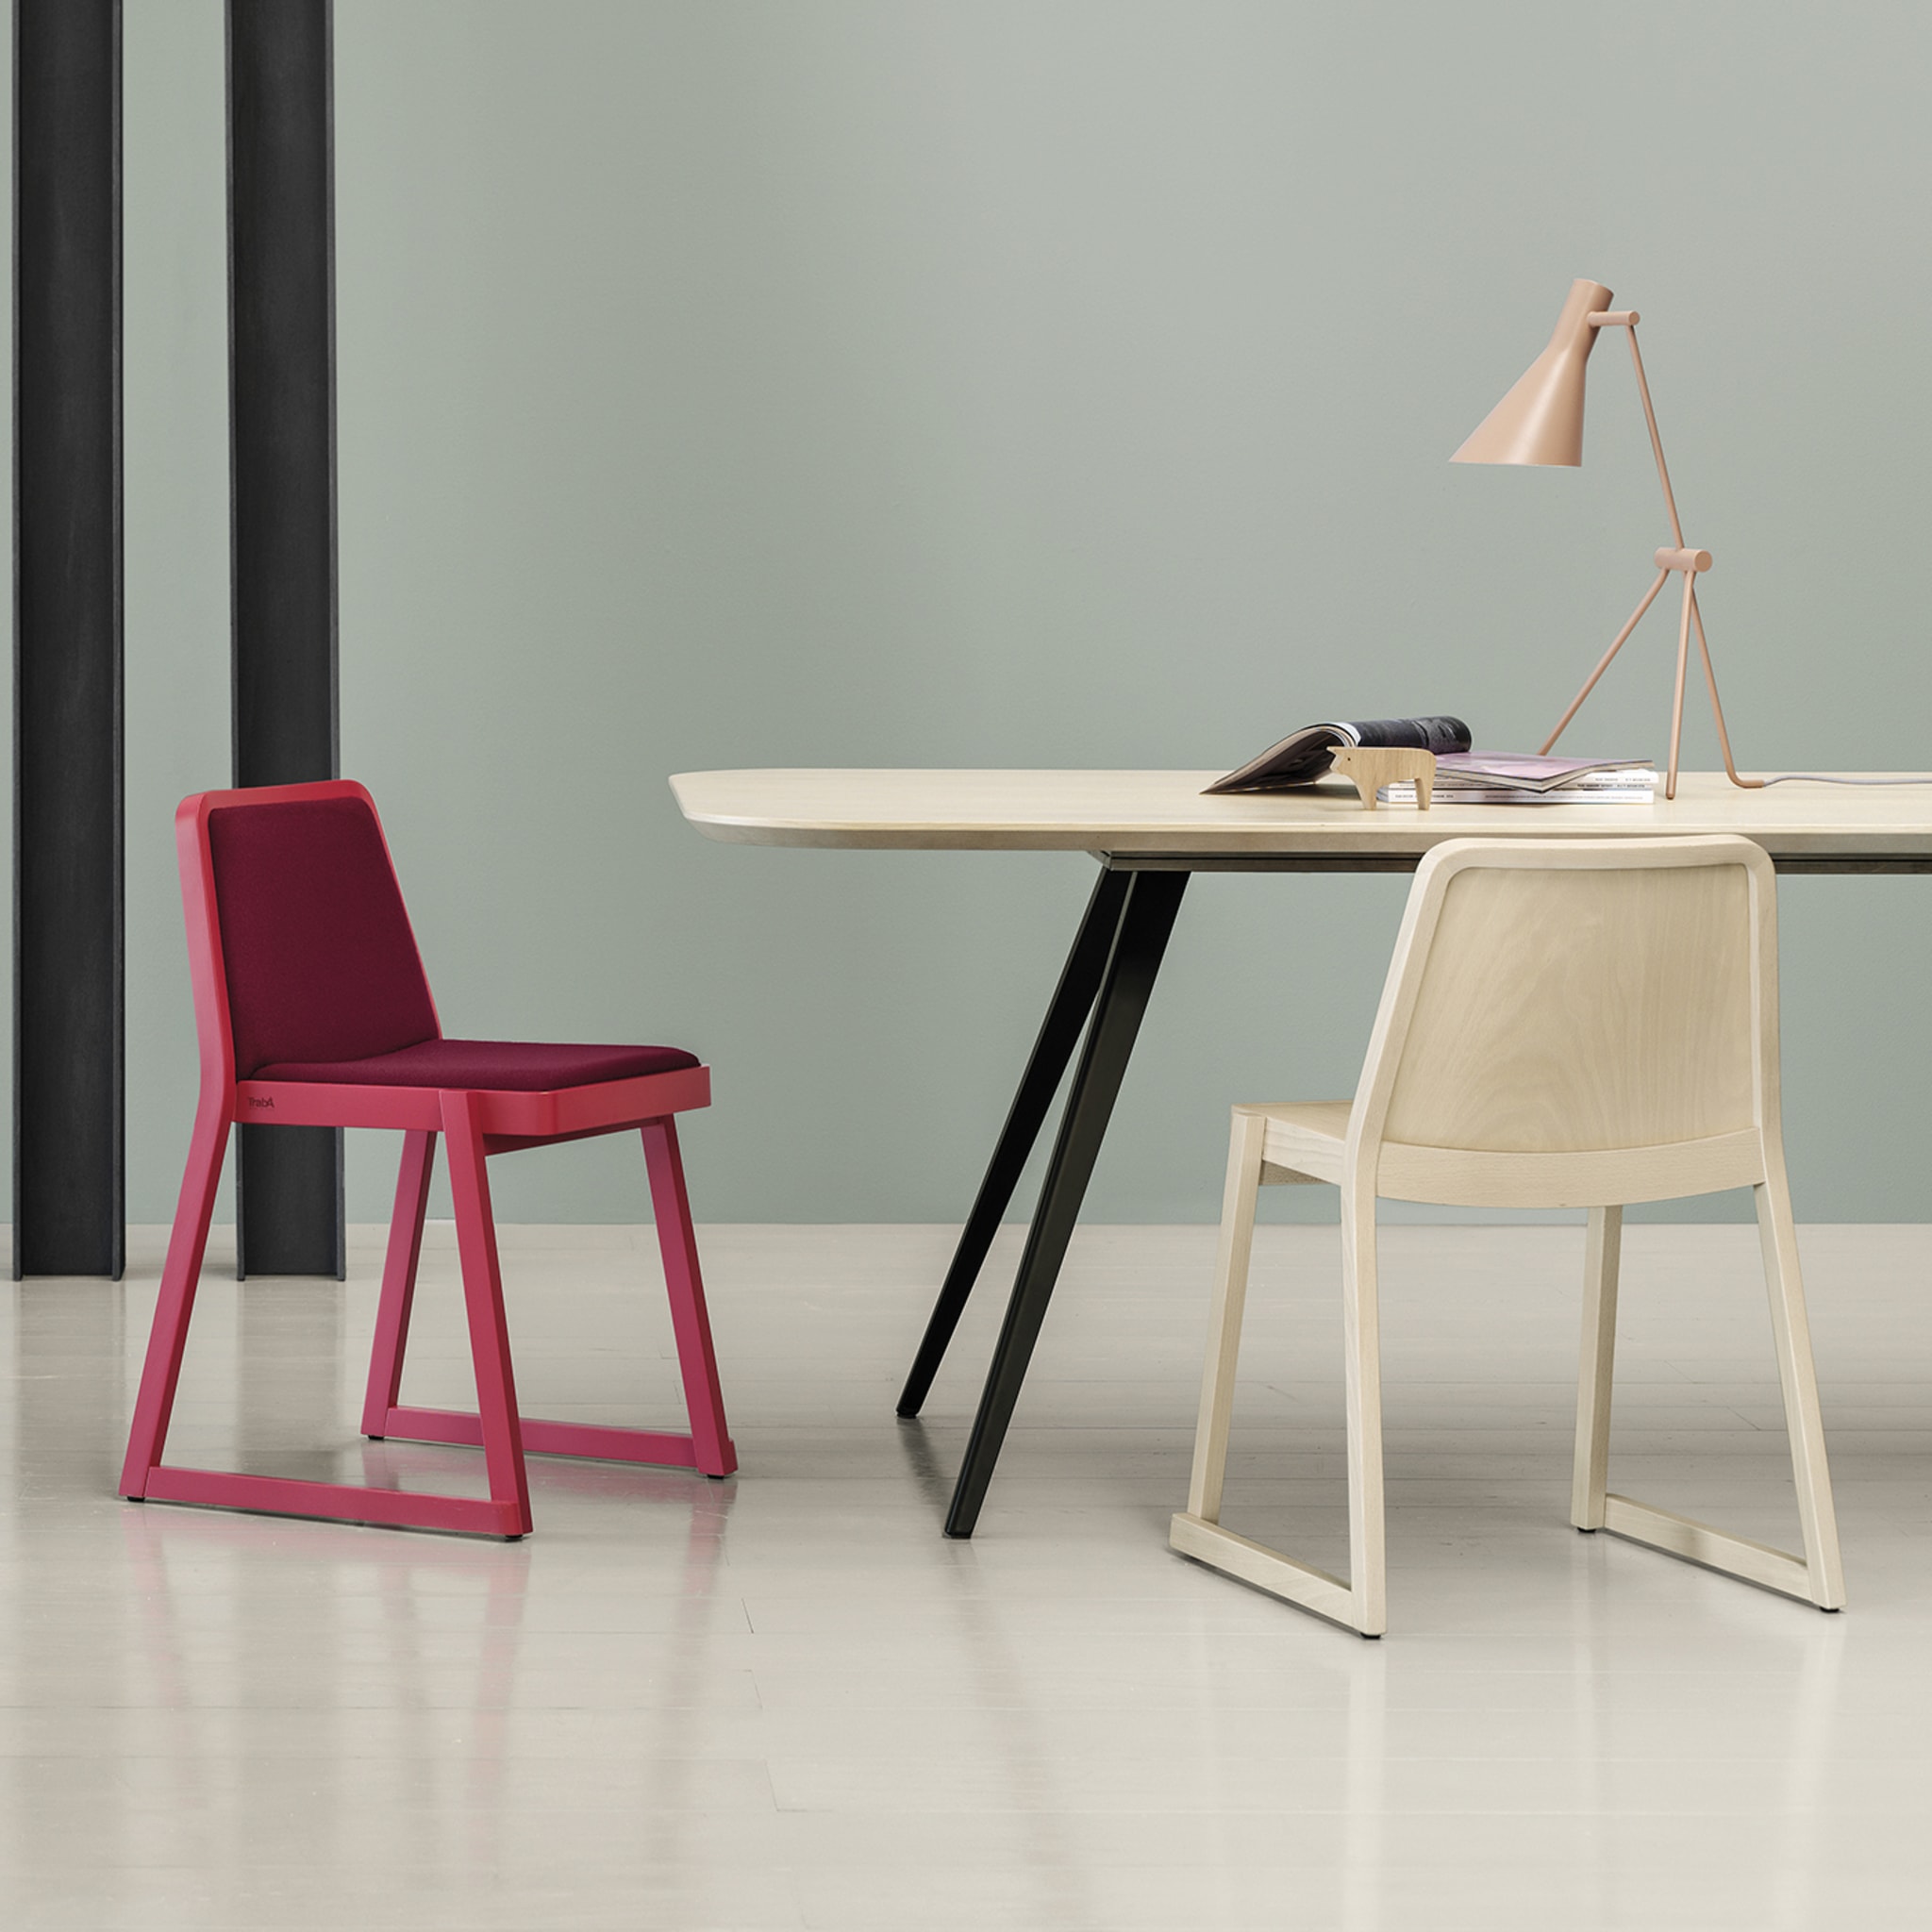 Roxanne Pink Chair by Emilio Nanni - Alternative view 3